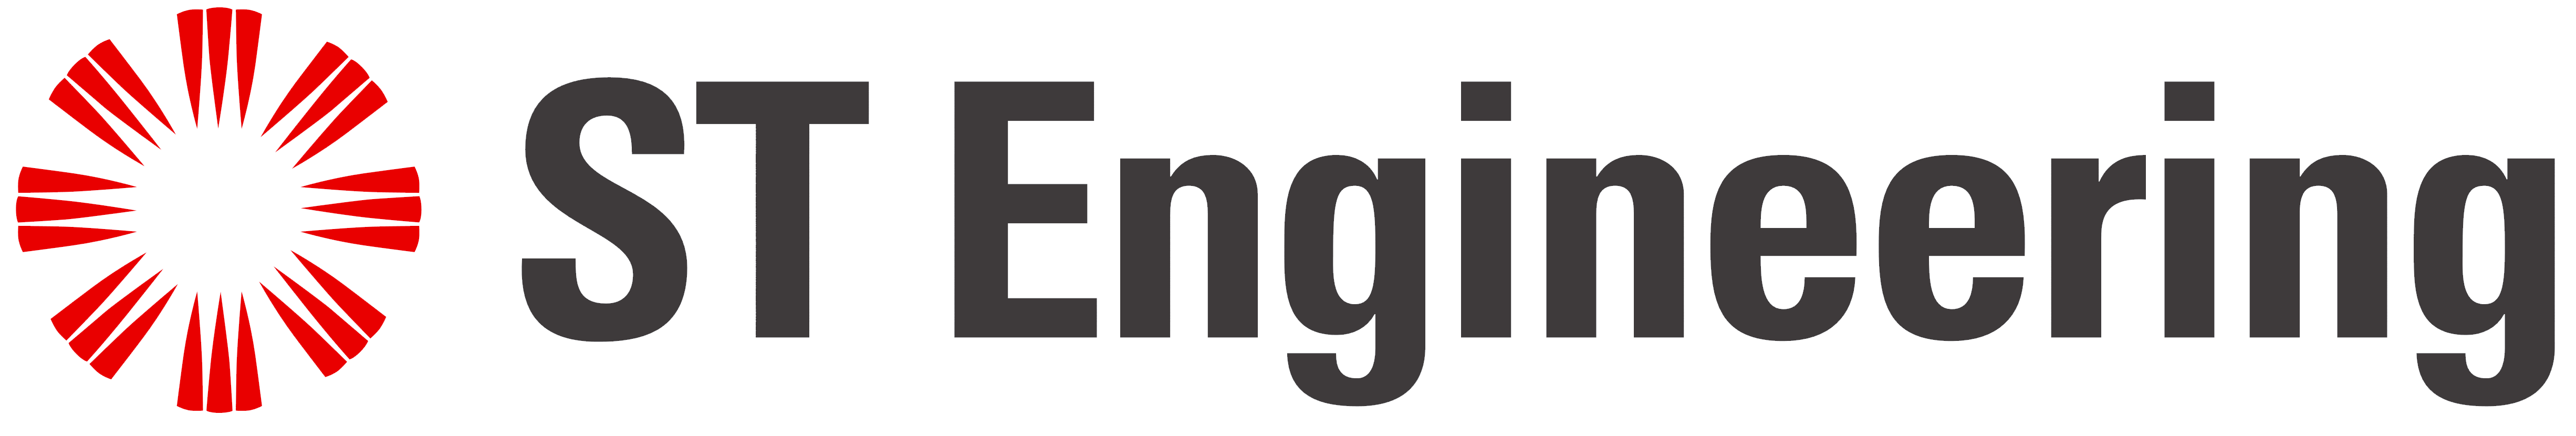 ST Engineering Brand Logo